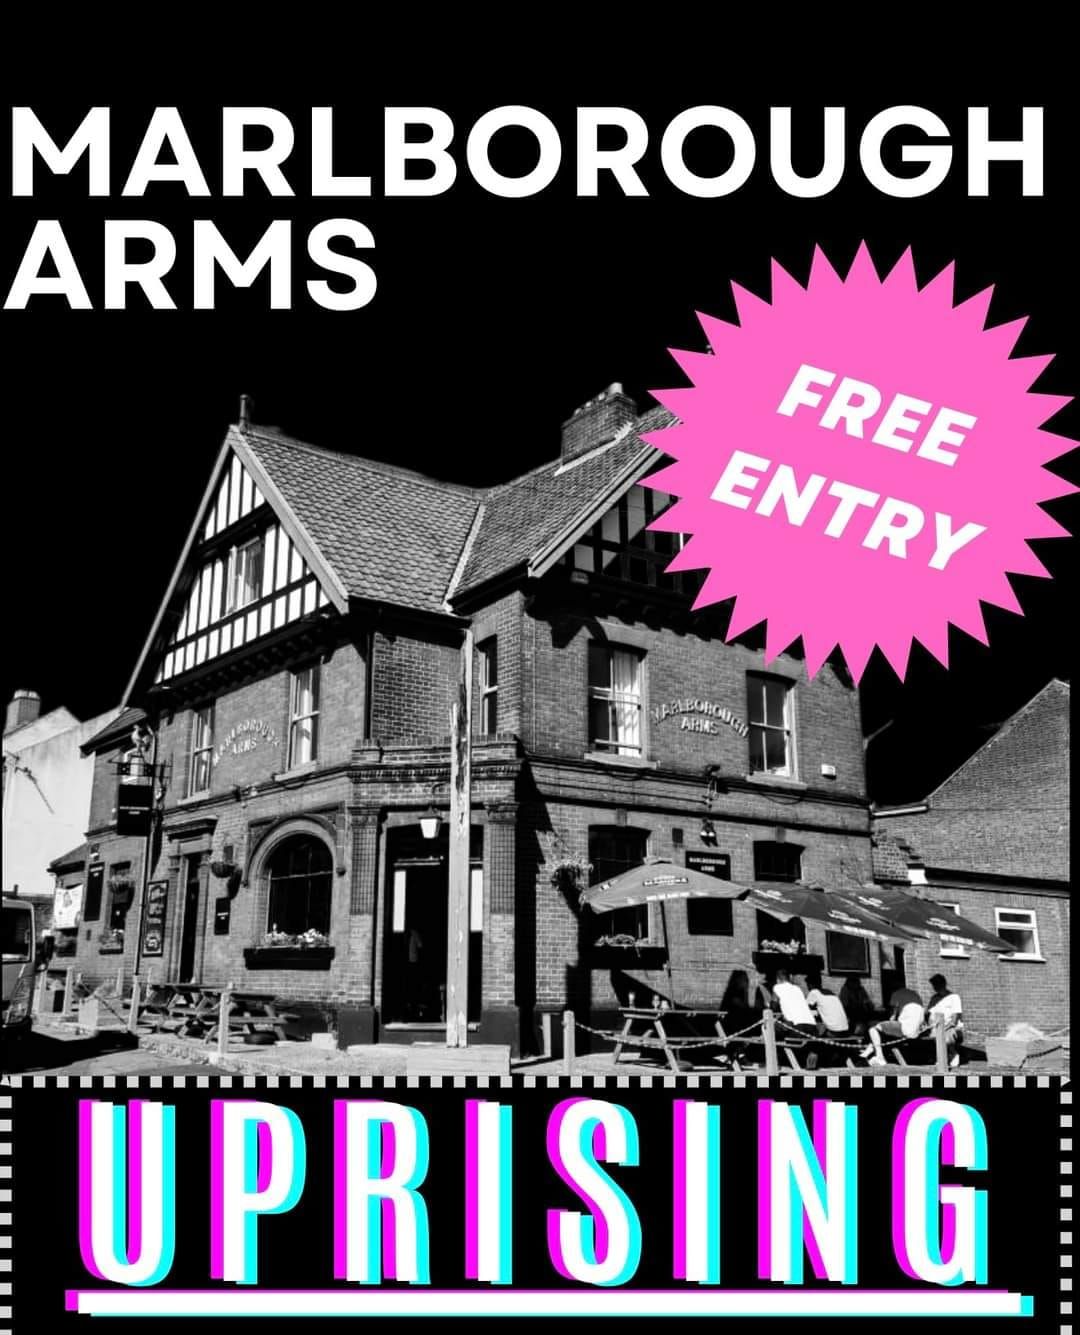 Uprising @ The Marlborough Arms